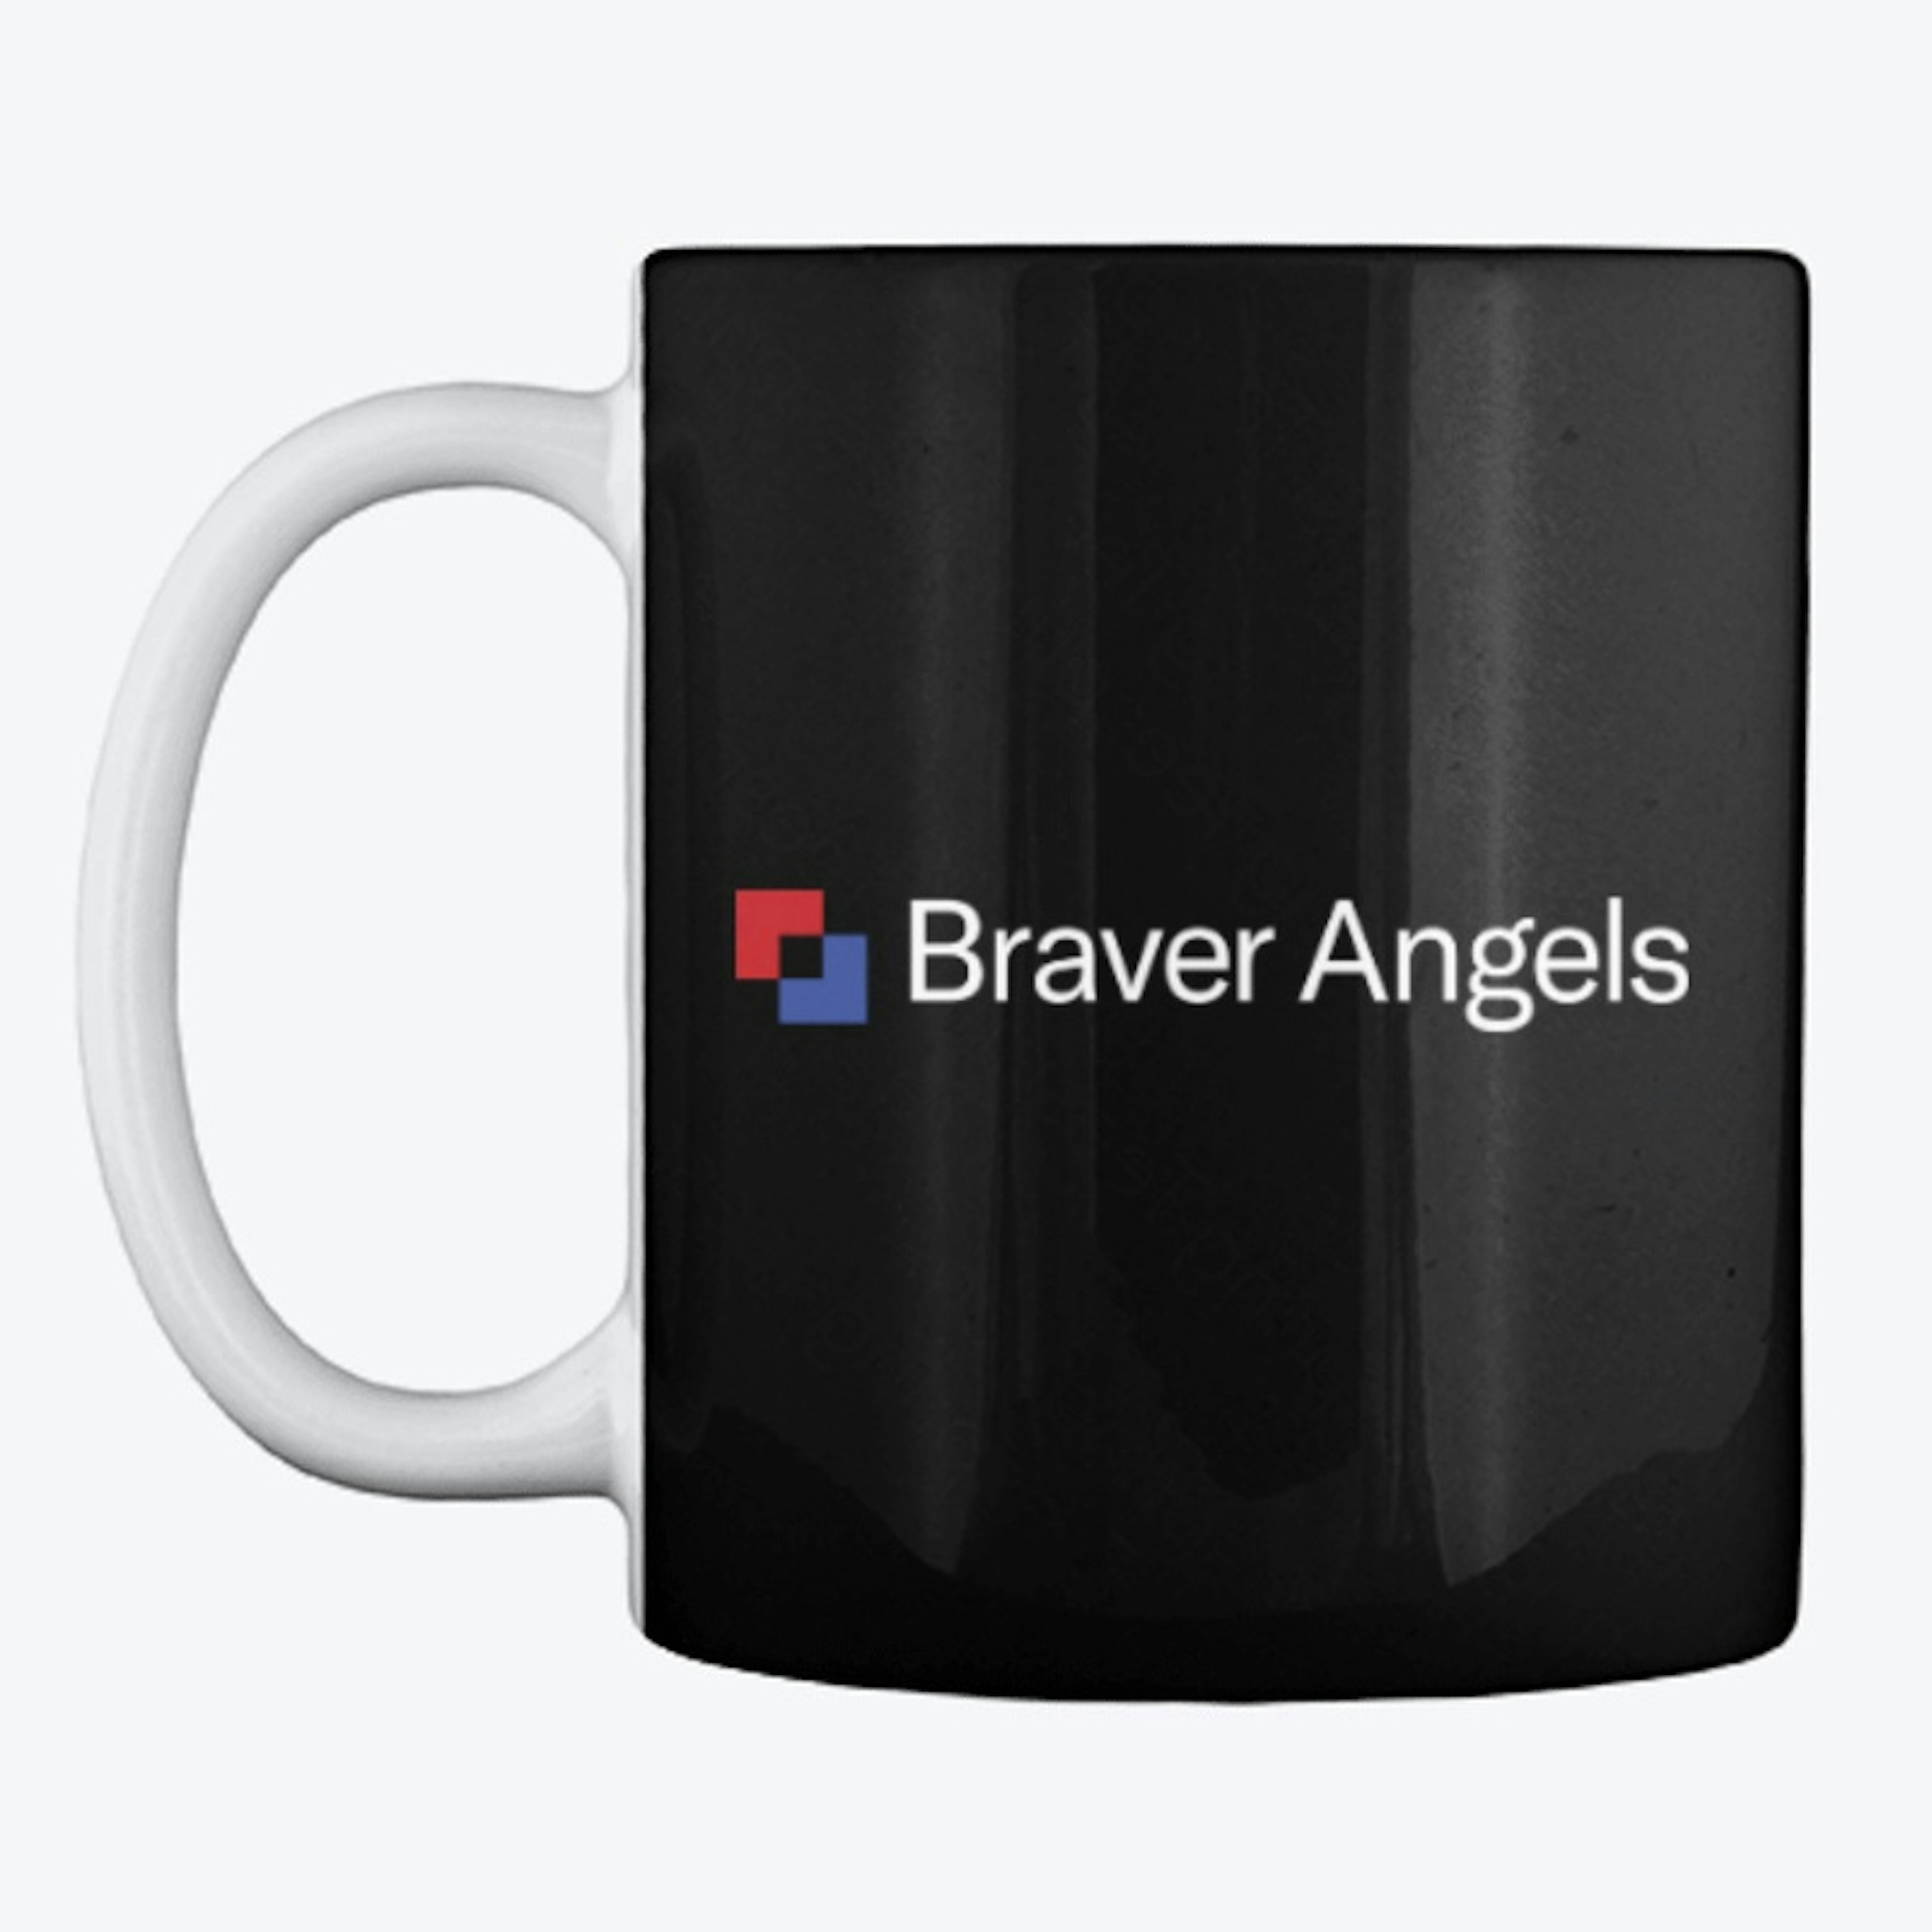 Braver Angels Mug (black)